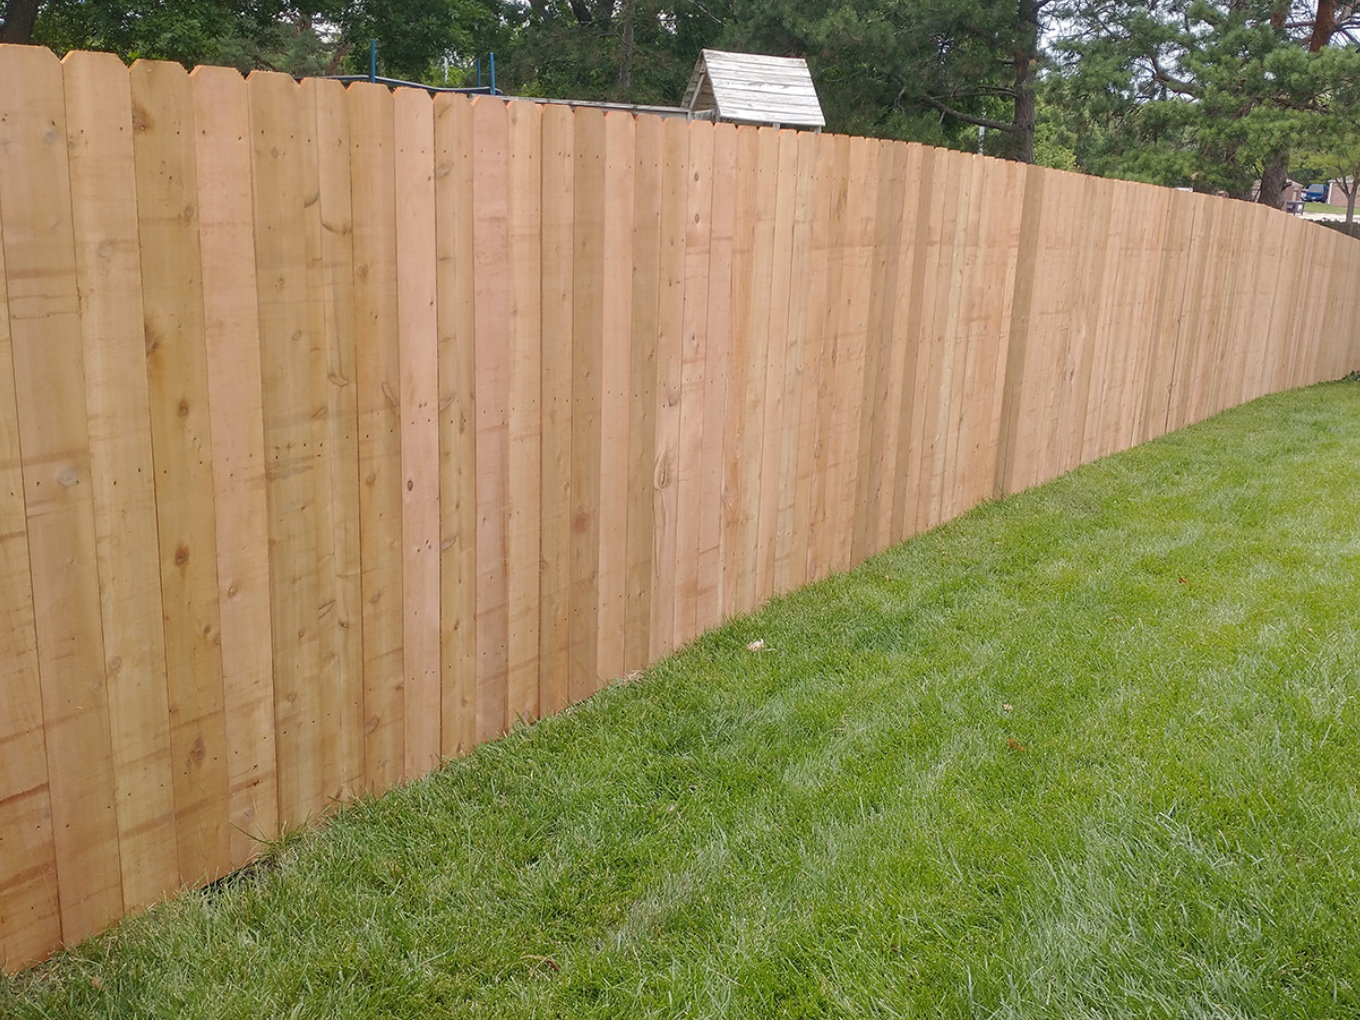 Fremont NEPrivacy Style Wood Fences